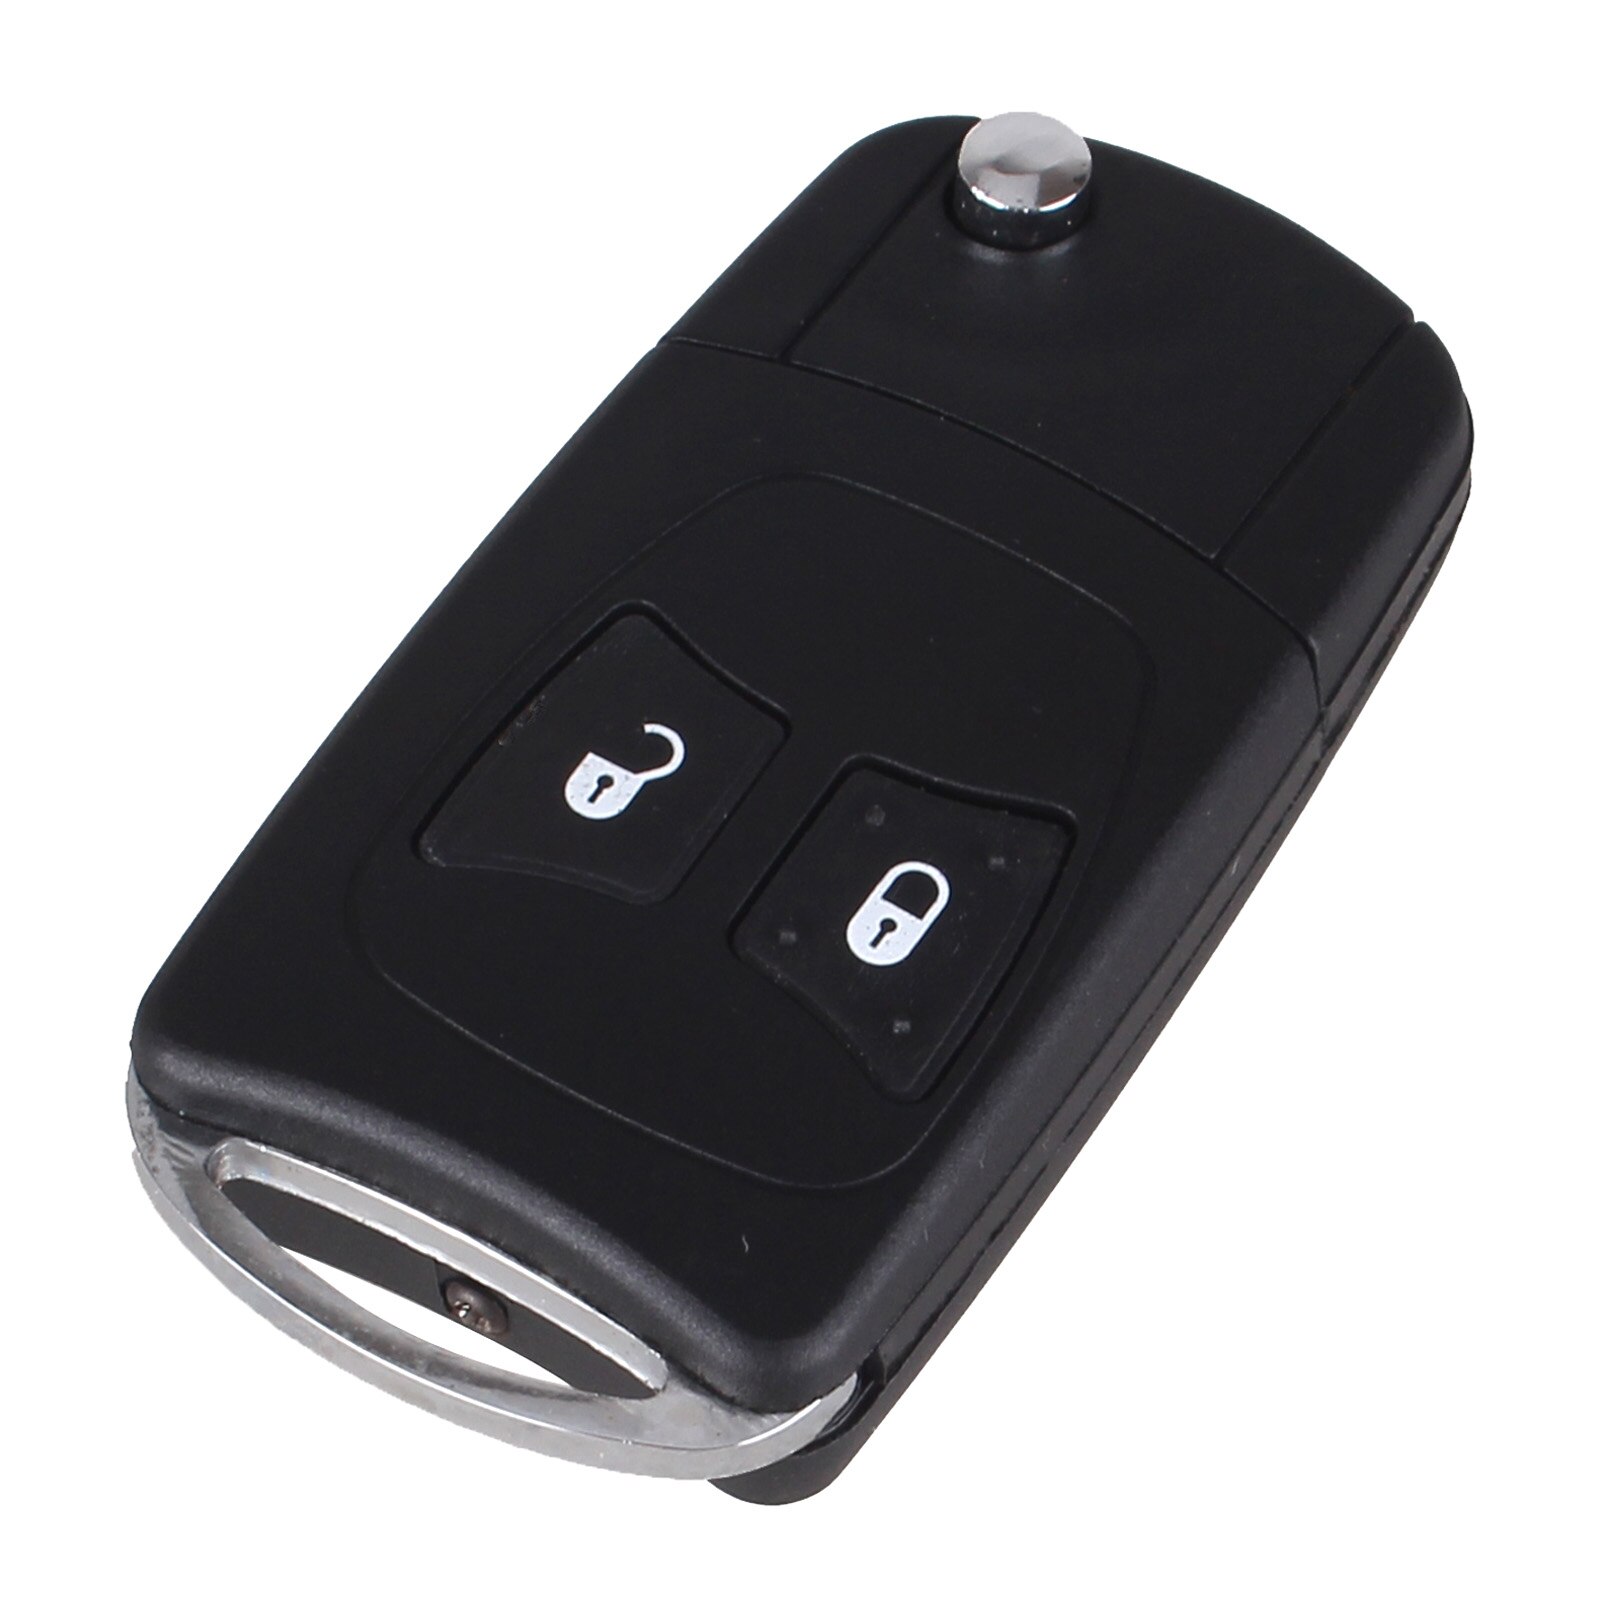 2 Button Modified Flip Car Key Key Shell For Chrysler Aspen Dodge Jeep Commander Grand Cherokee Car Remote Key Case